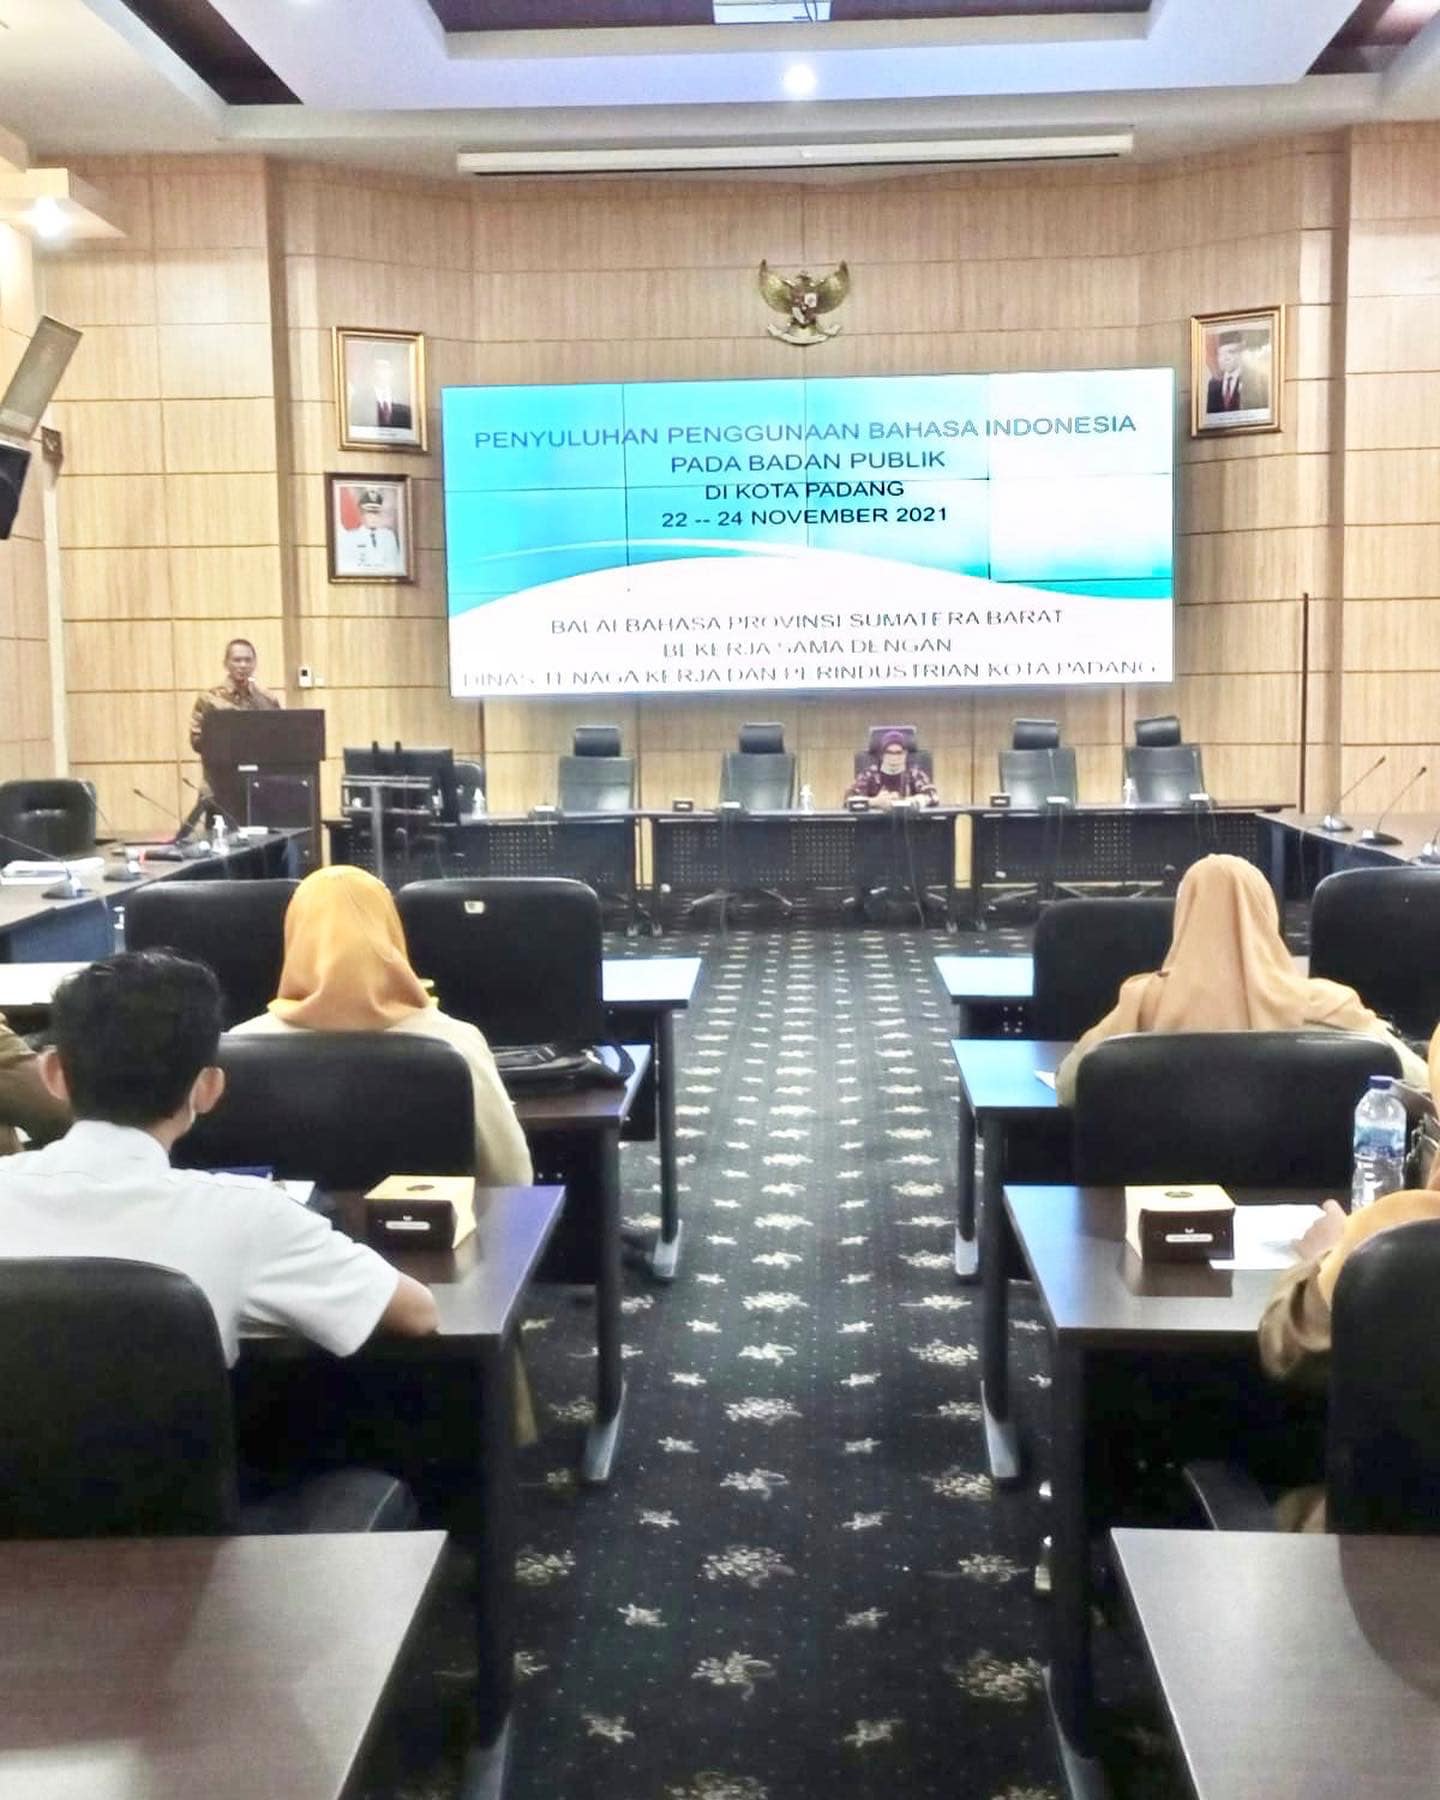 Penyuluhan Penggunaan Bahasa Indonesia Pada Badan Publik Di Kota Padang